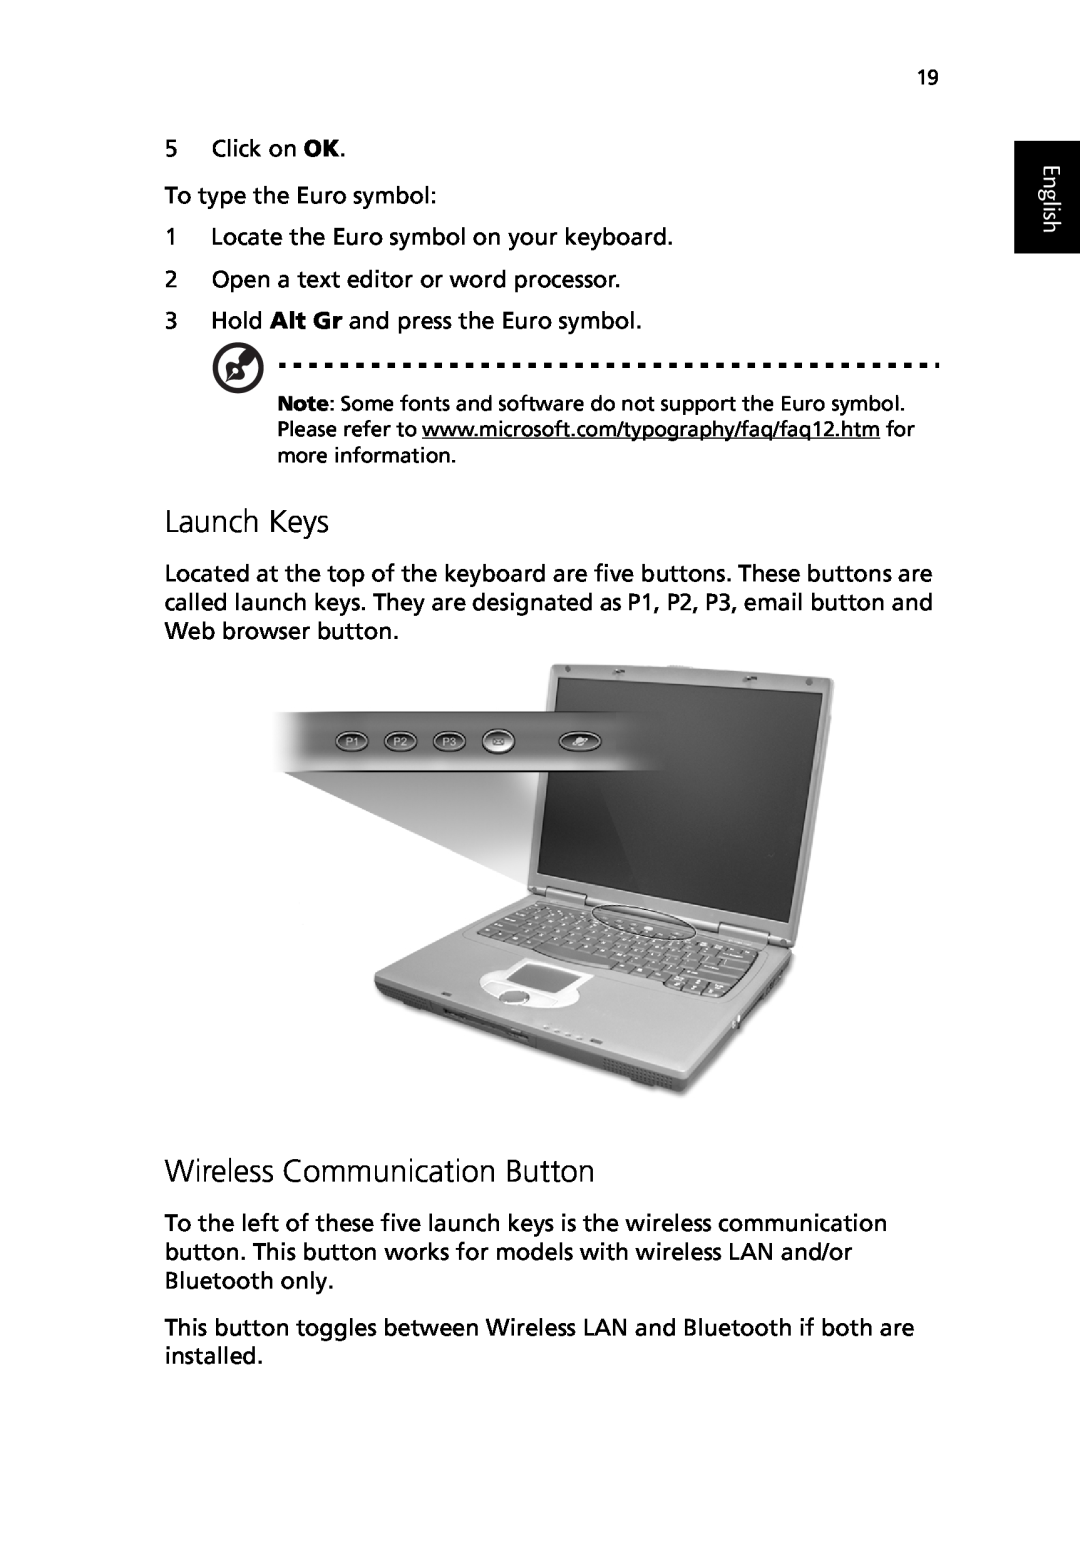 Acer TravelMate 530 manual Launch Keys, Wireless Communication Button, English 